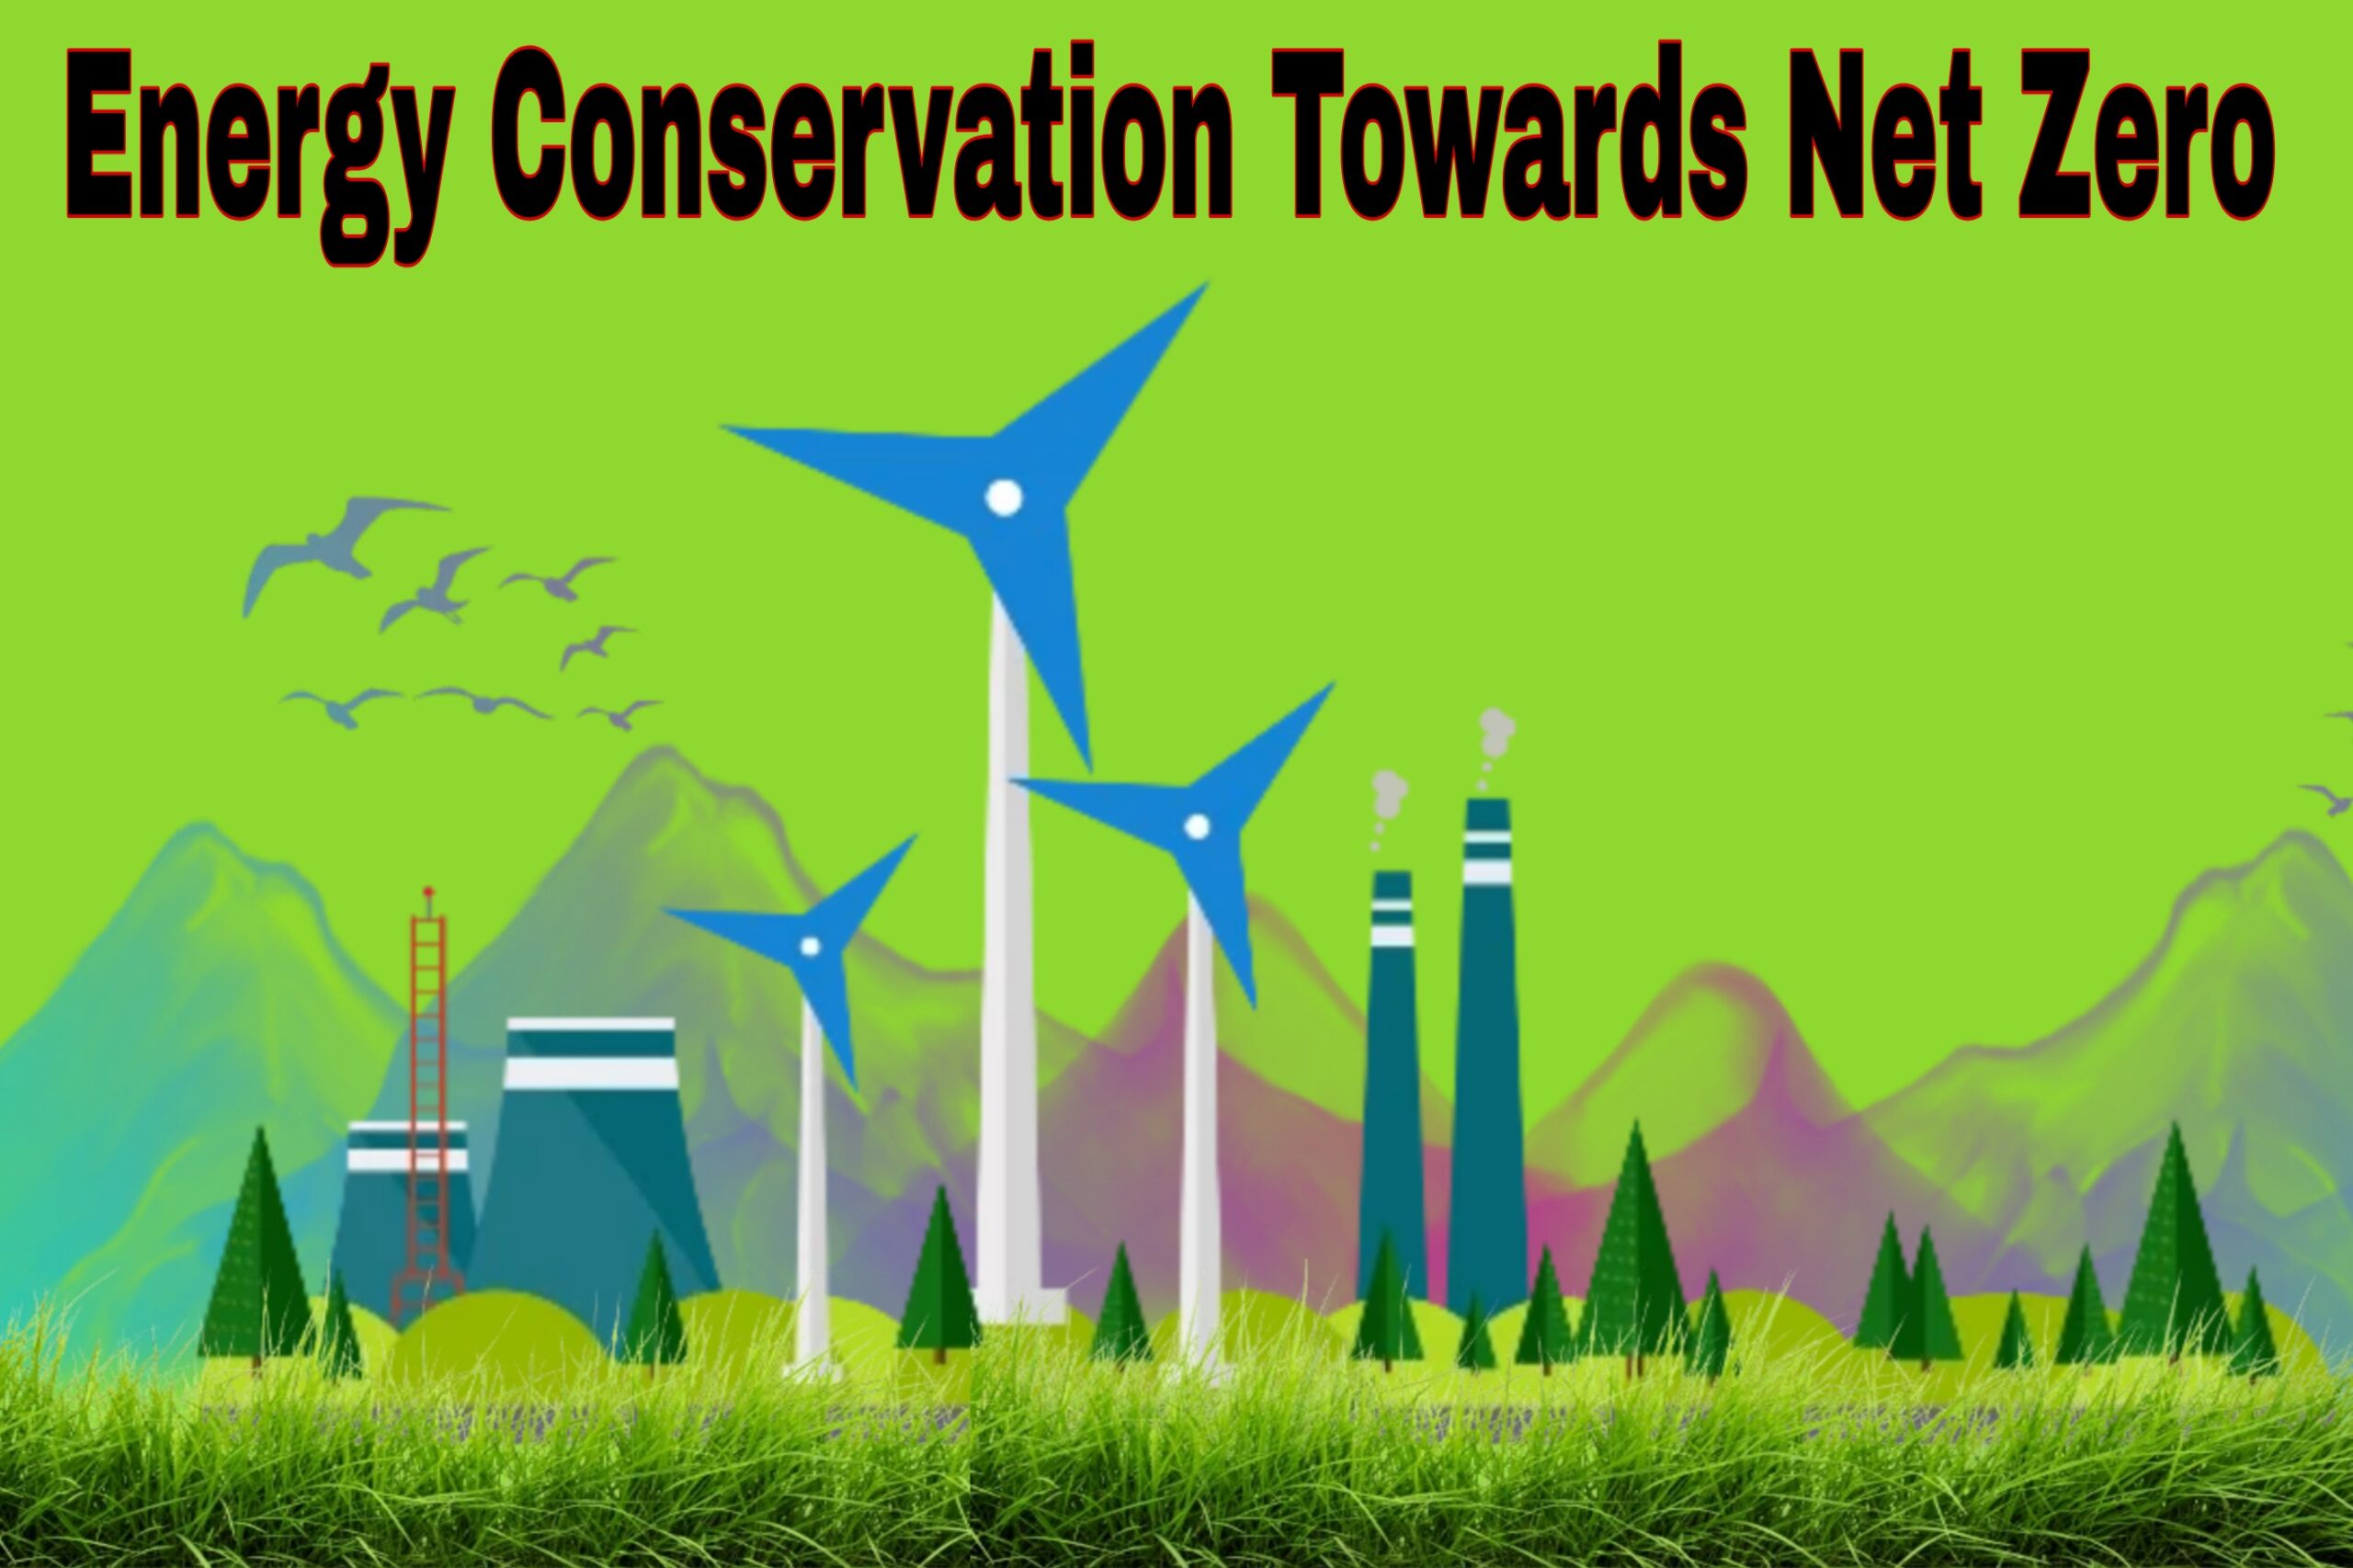 Energy conservation towards net zero drawing